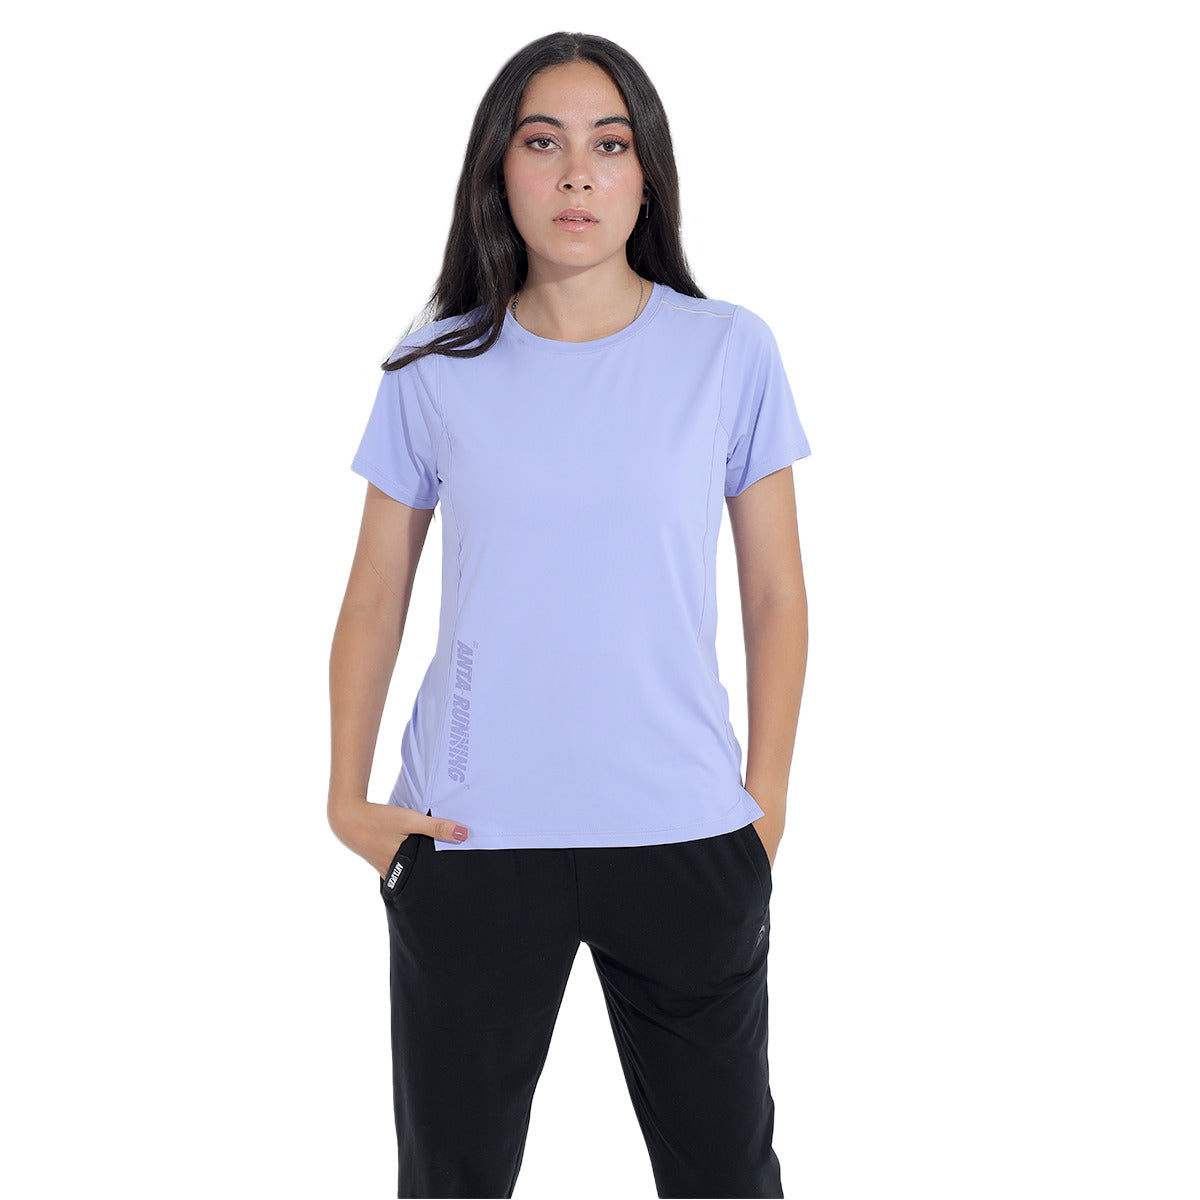 Anta SS Tee Running T-Shirt For Women, Violet